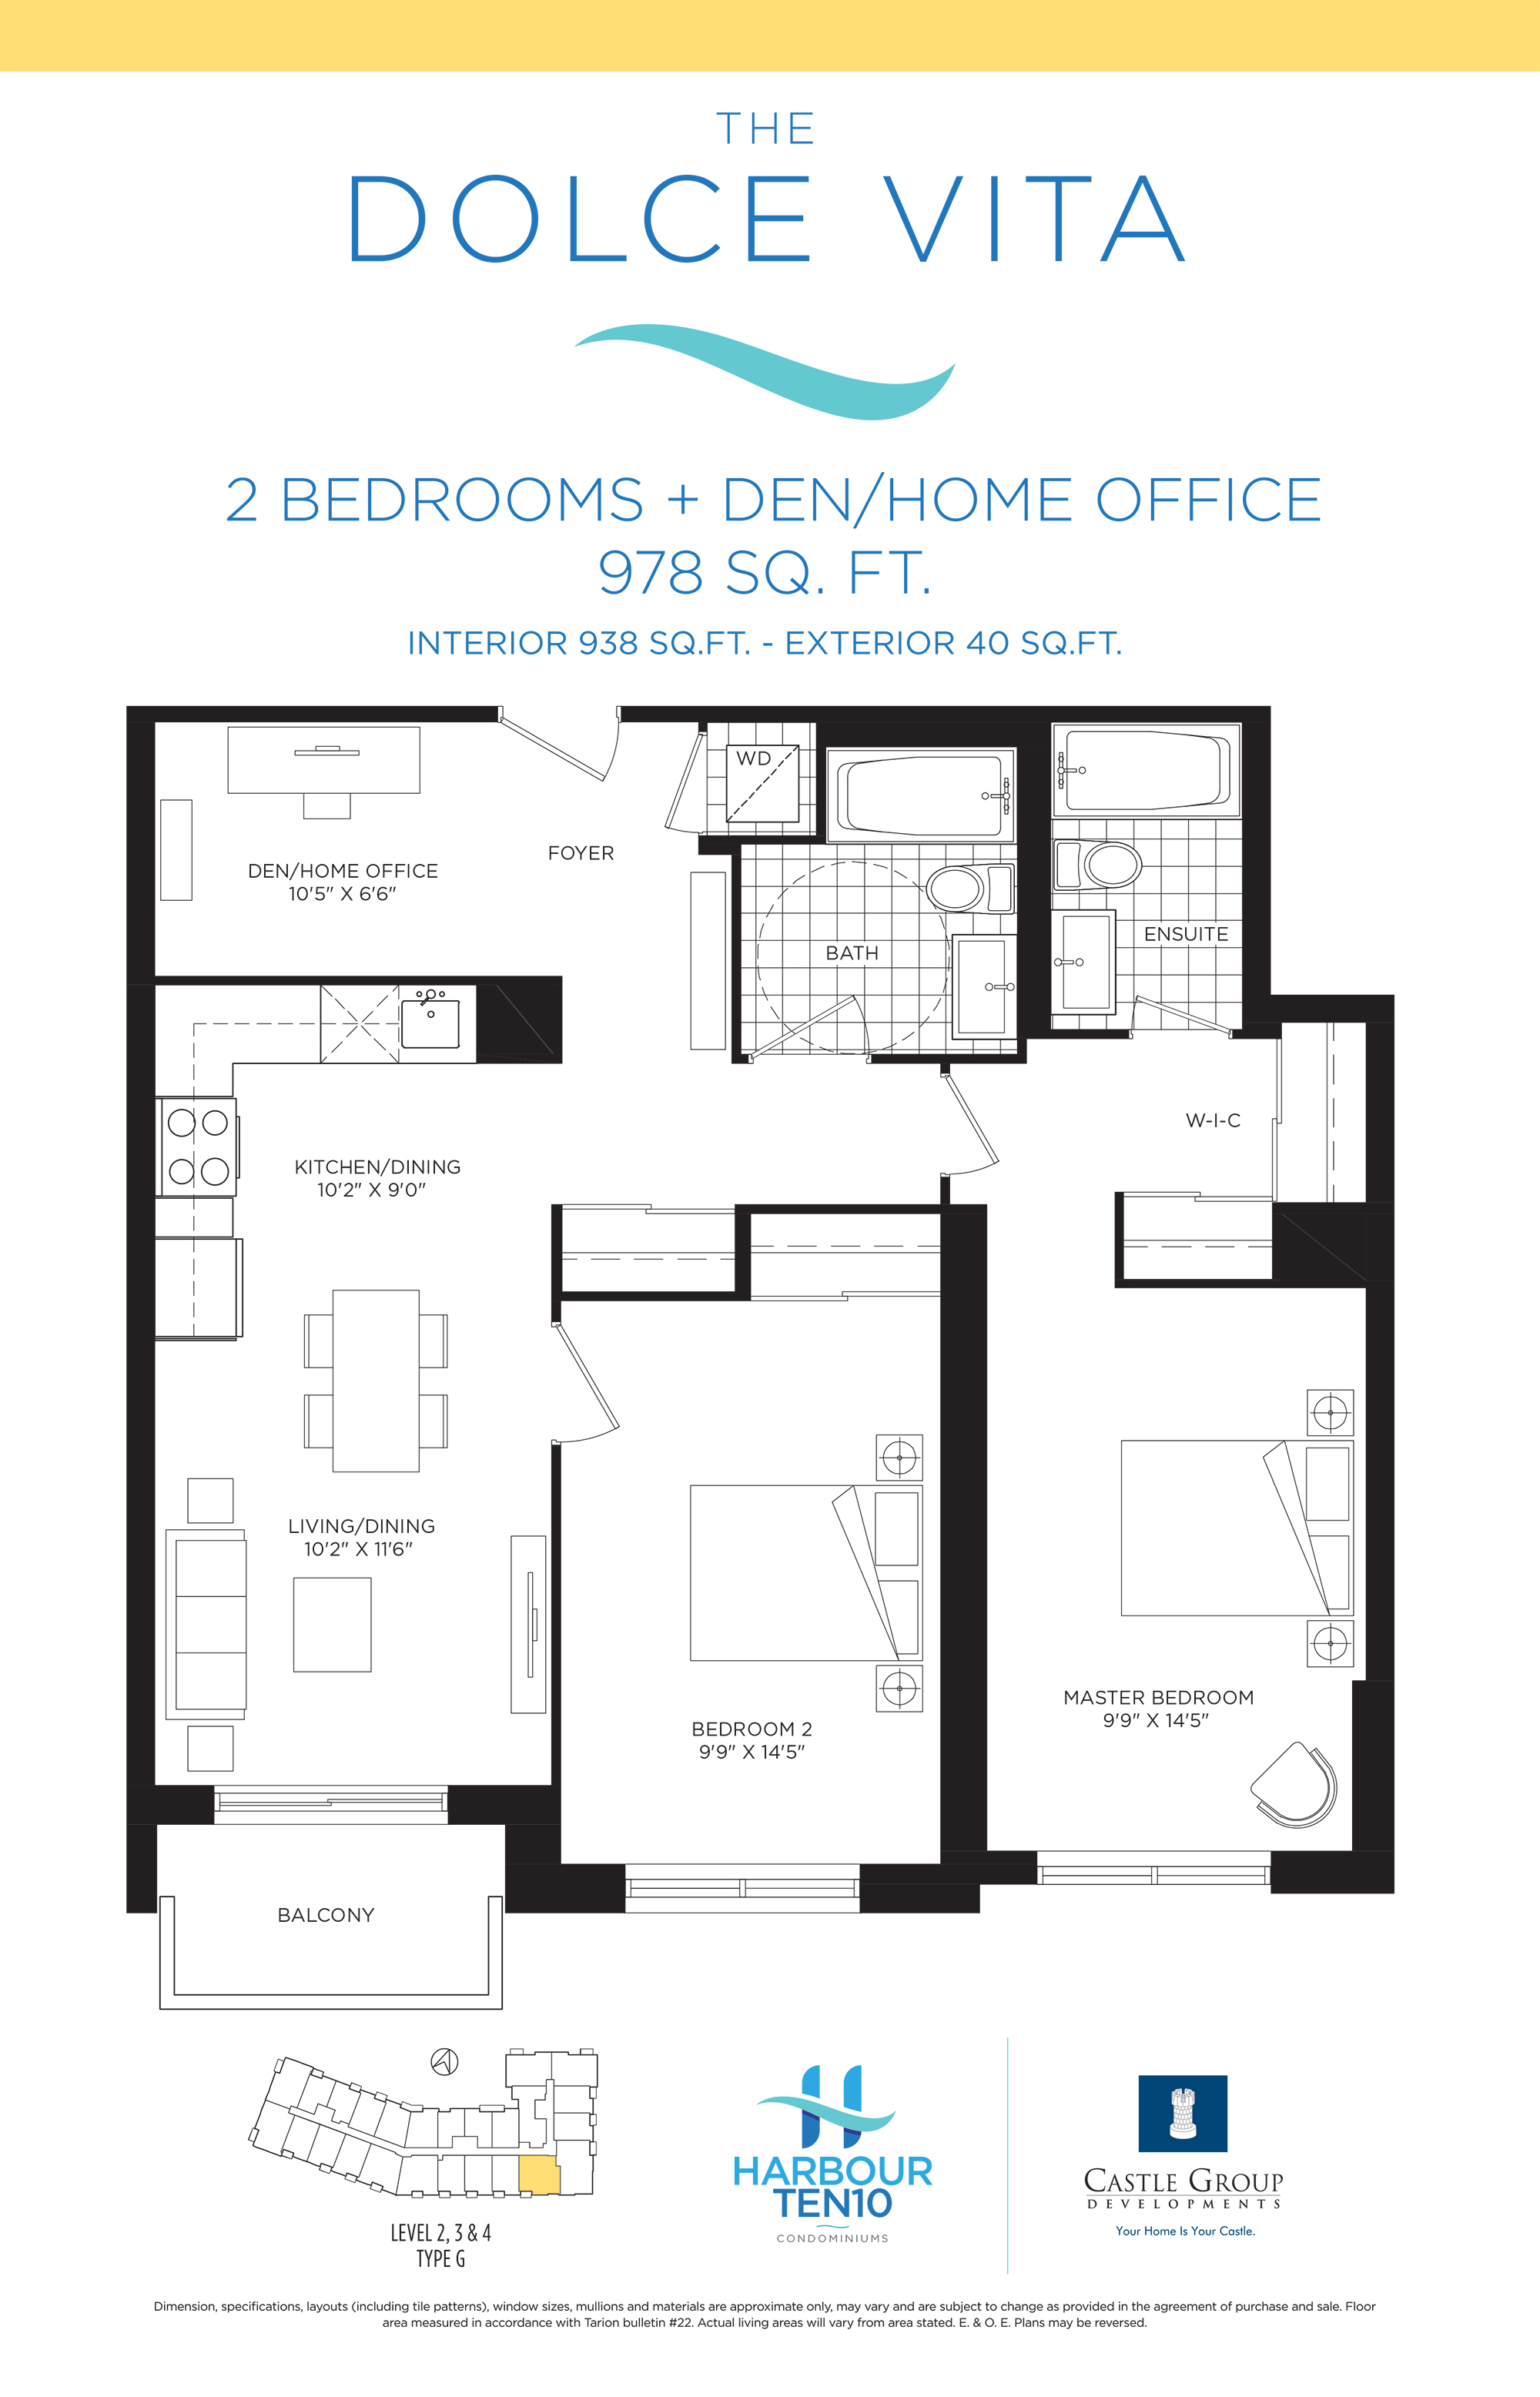 The Dolce Vita - 2.5 Bedroom Floor Plan of Harbour Ten10 Condos with undefined beds